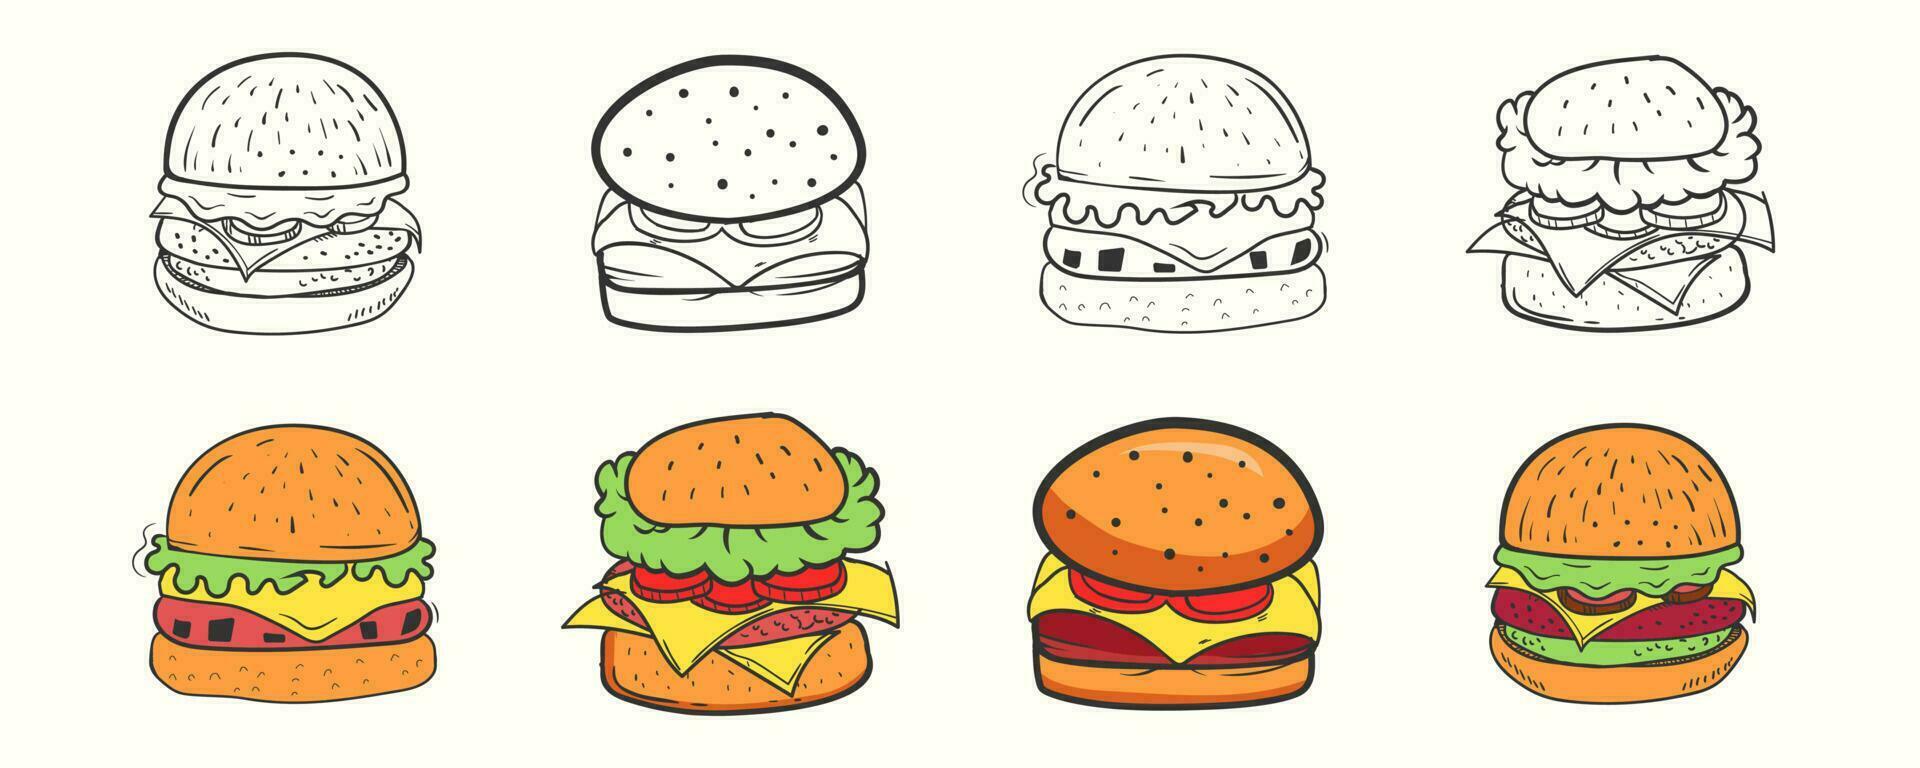 Hand drawn cartoon styled burgers vector illustration set